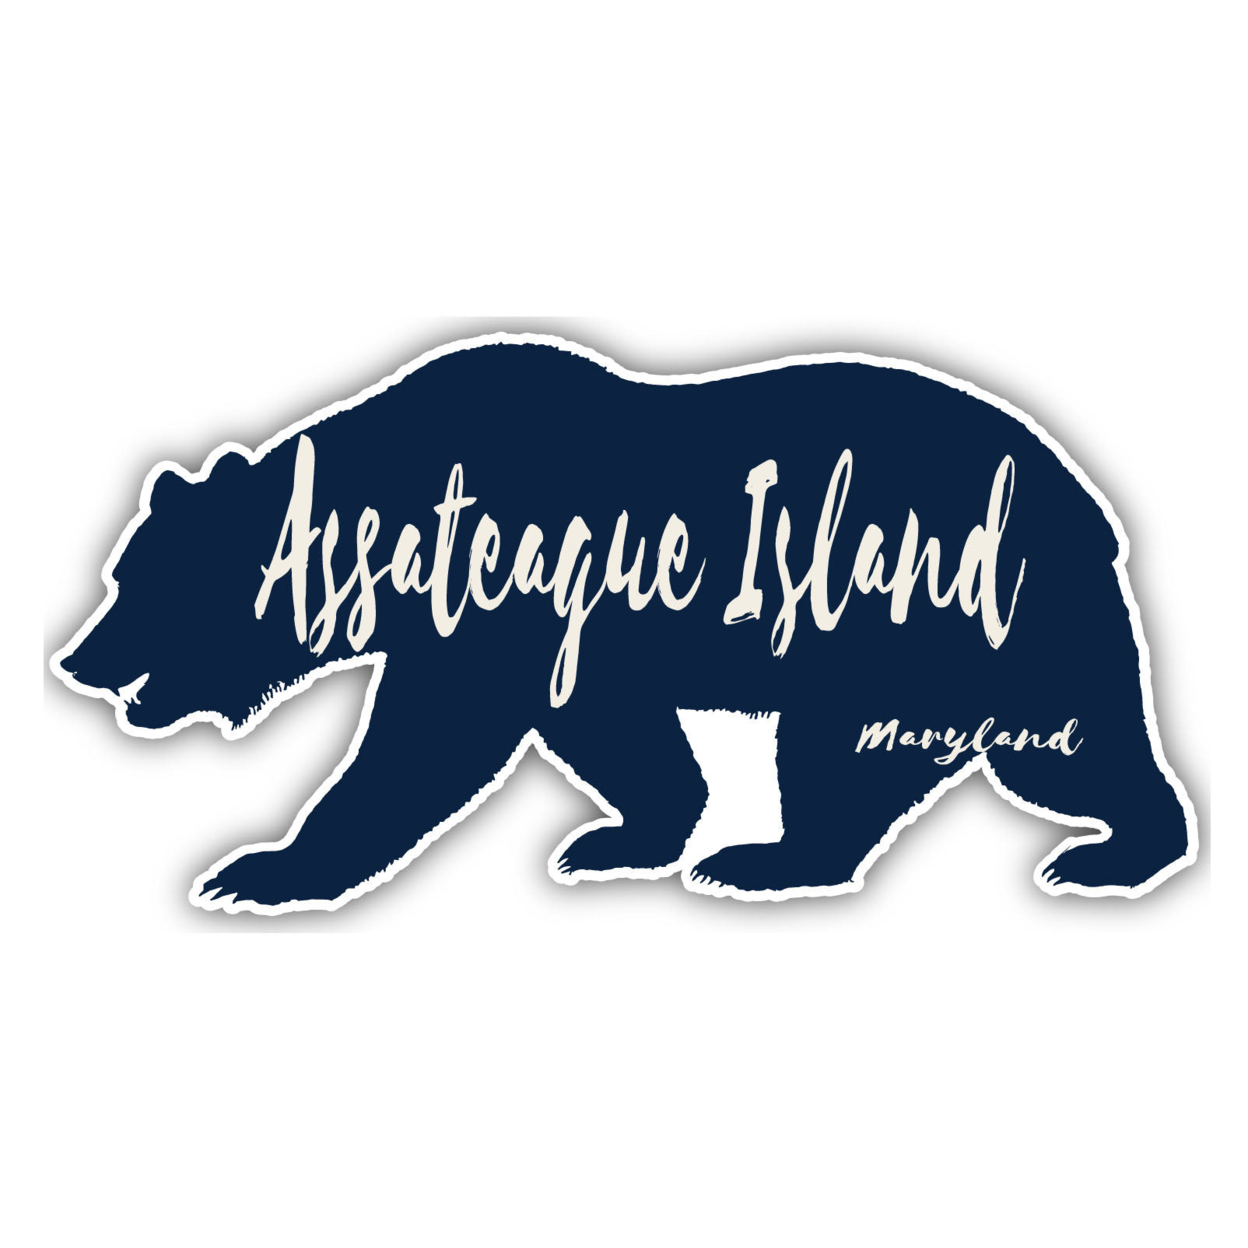 Assateague Island Maryland Souvenir Decorative Stickers (Choose Theme And Size) - Single Unit, 2-Inch, Bear